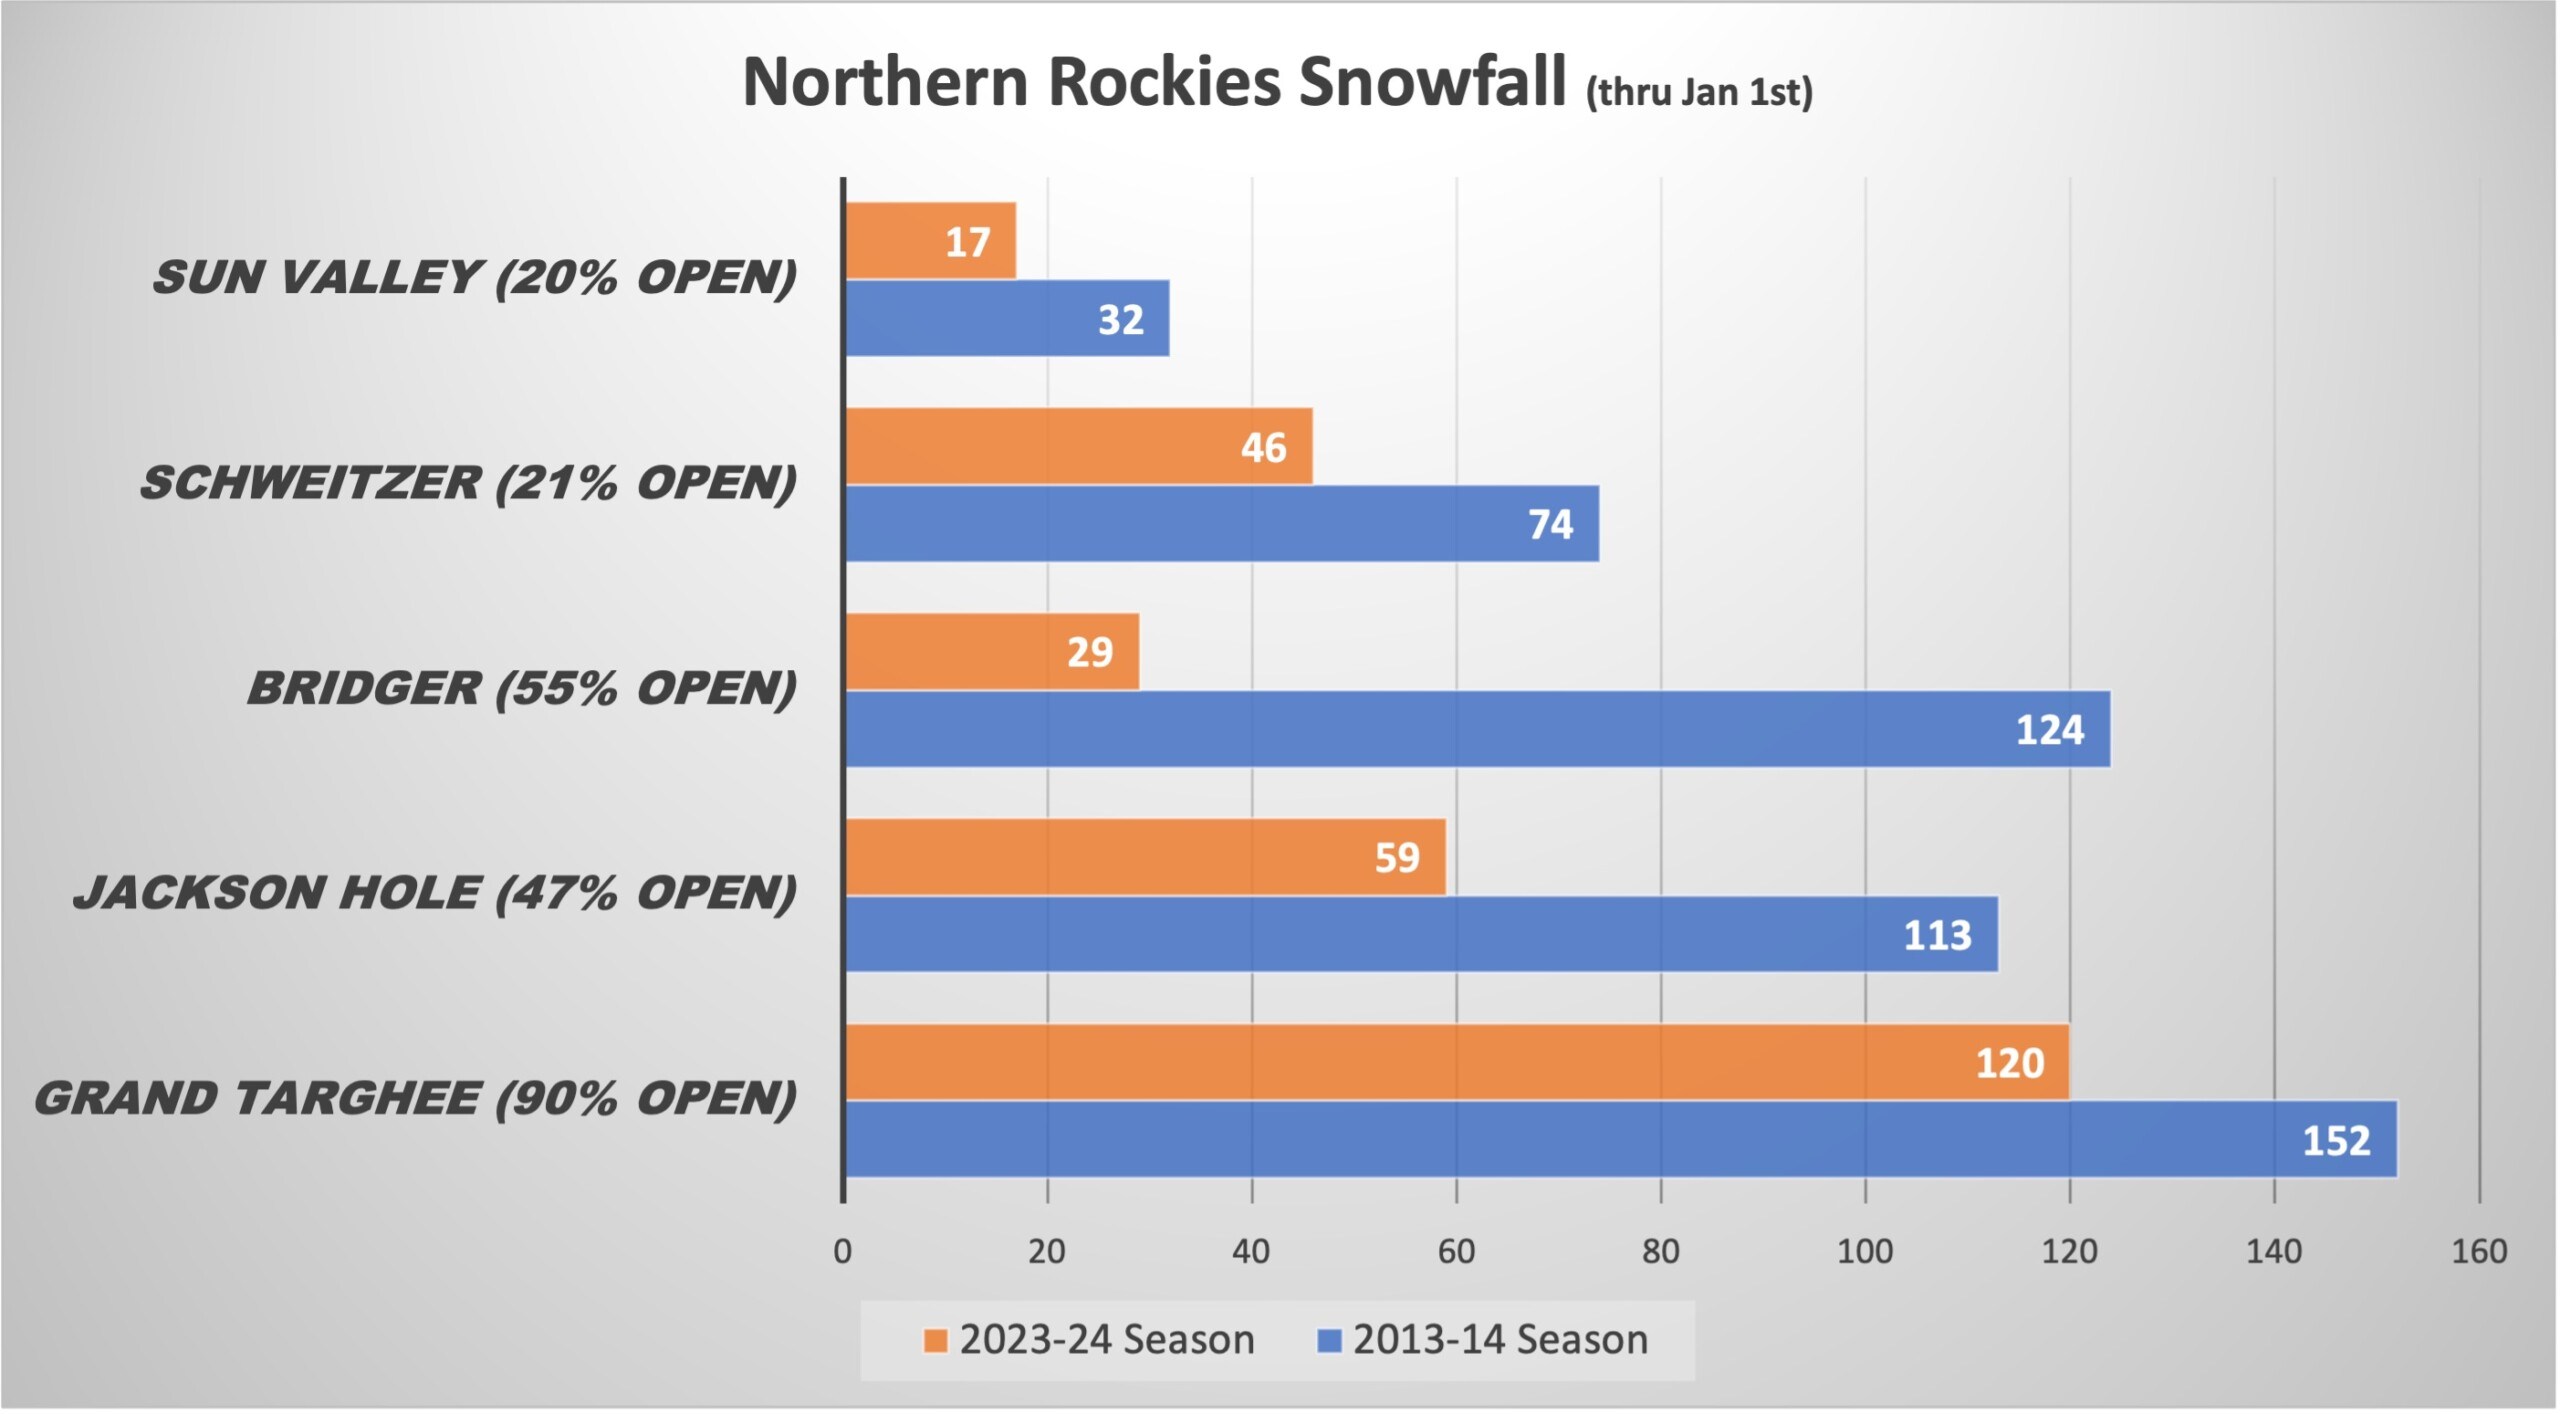 2023/24 Northern Rockies Ski Season Compare to 2013/14 ski season